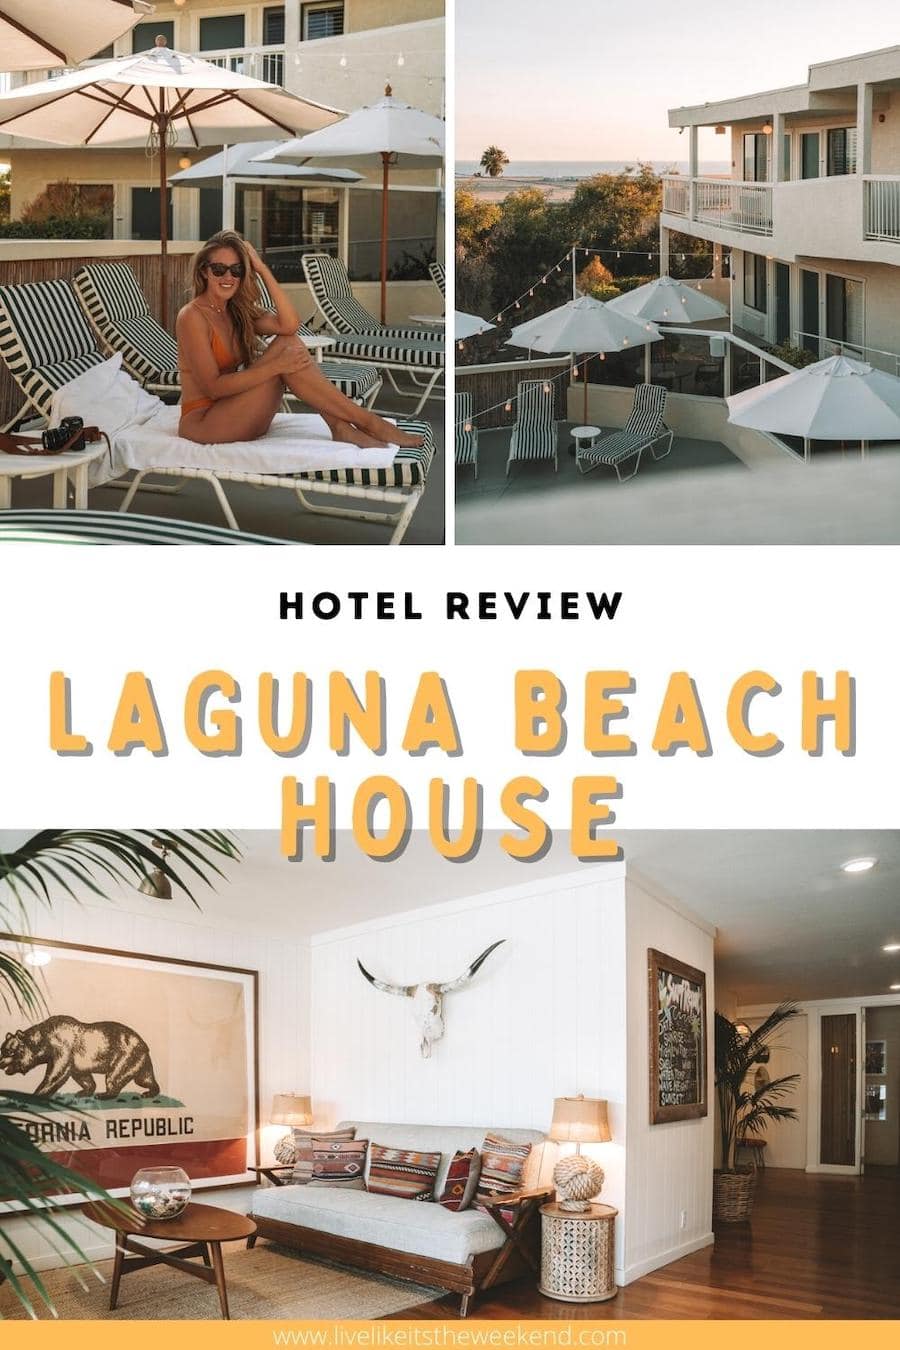 Laguna Beach House hotel review pinterest cover